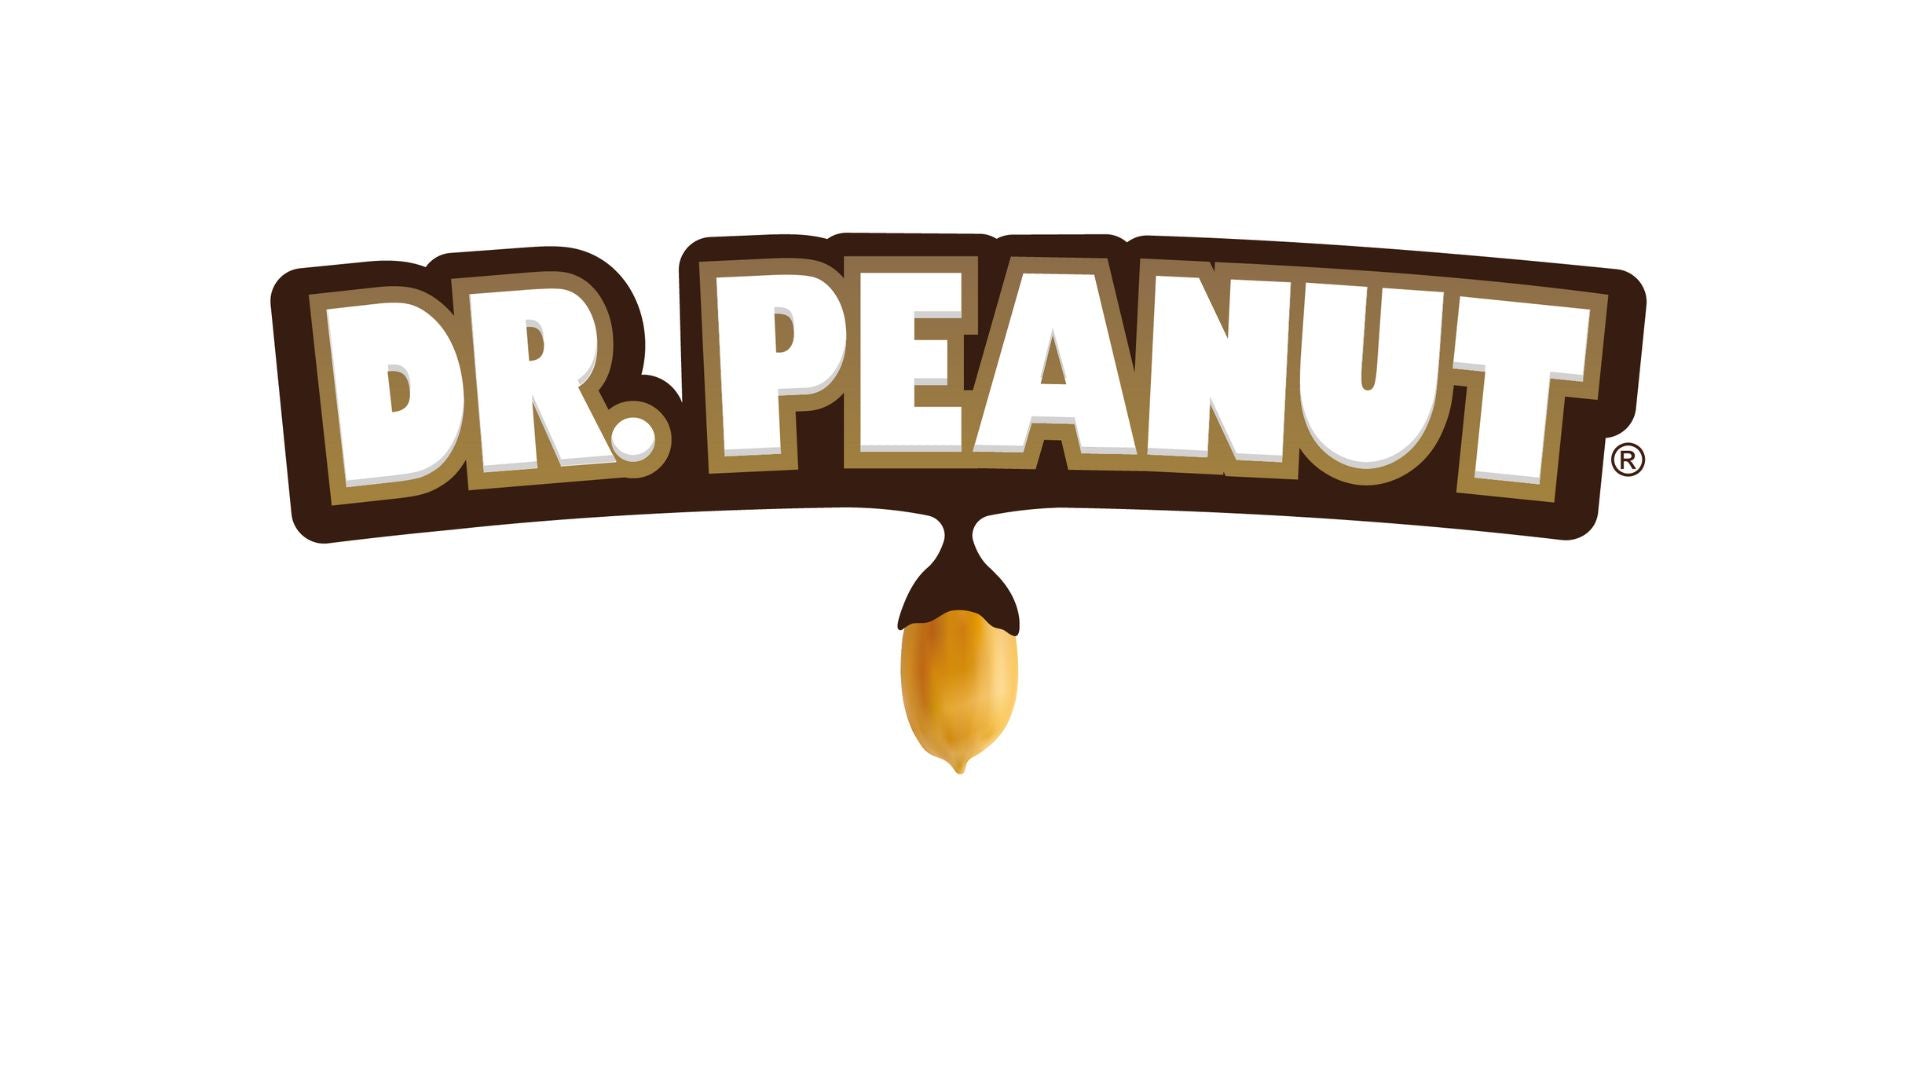 Pack Dr.Peanut 600g –